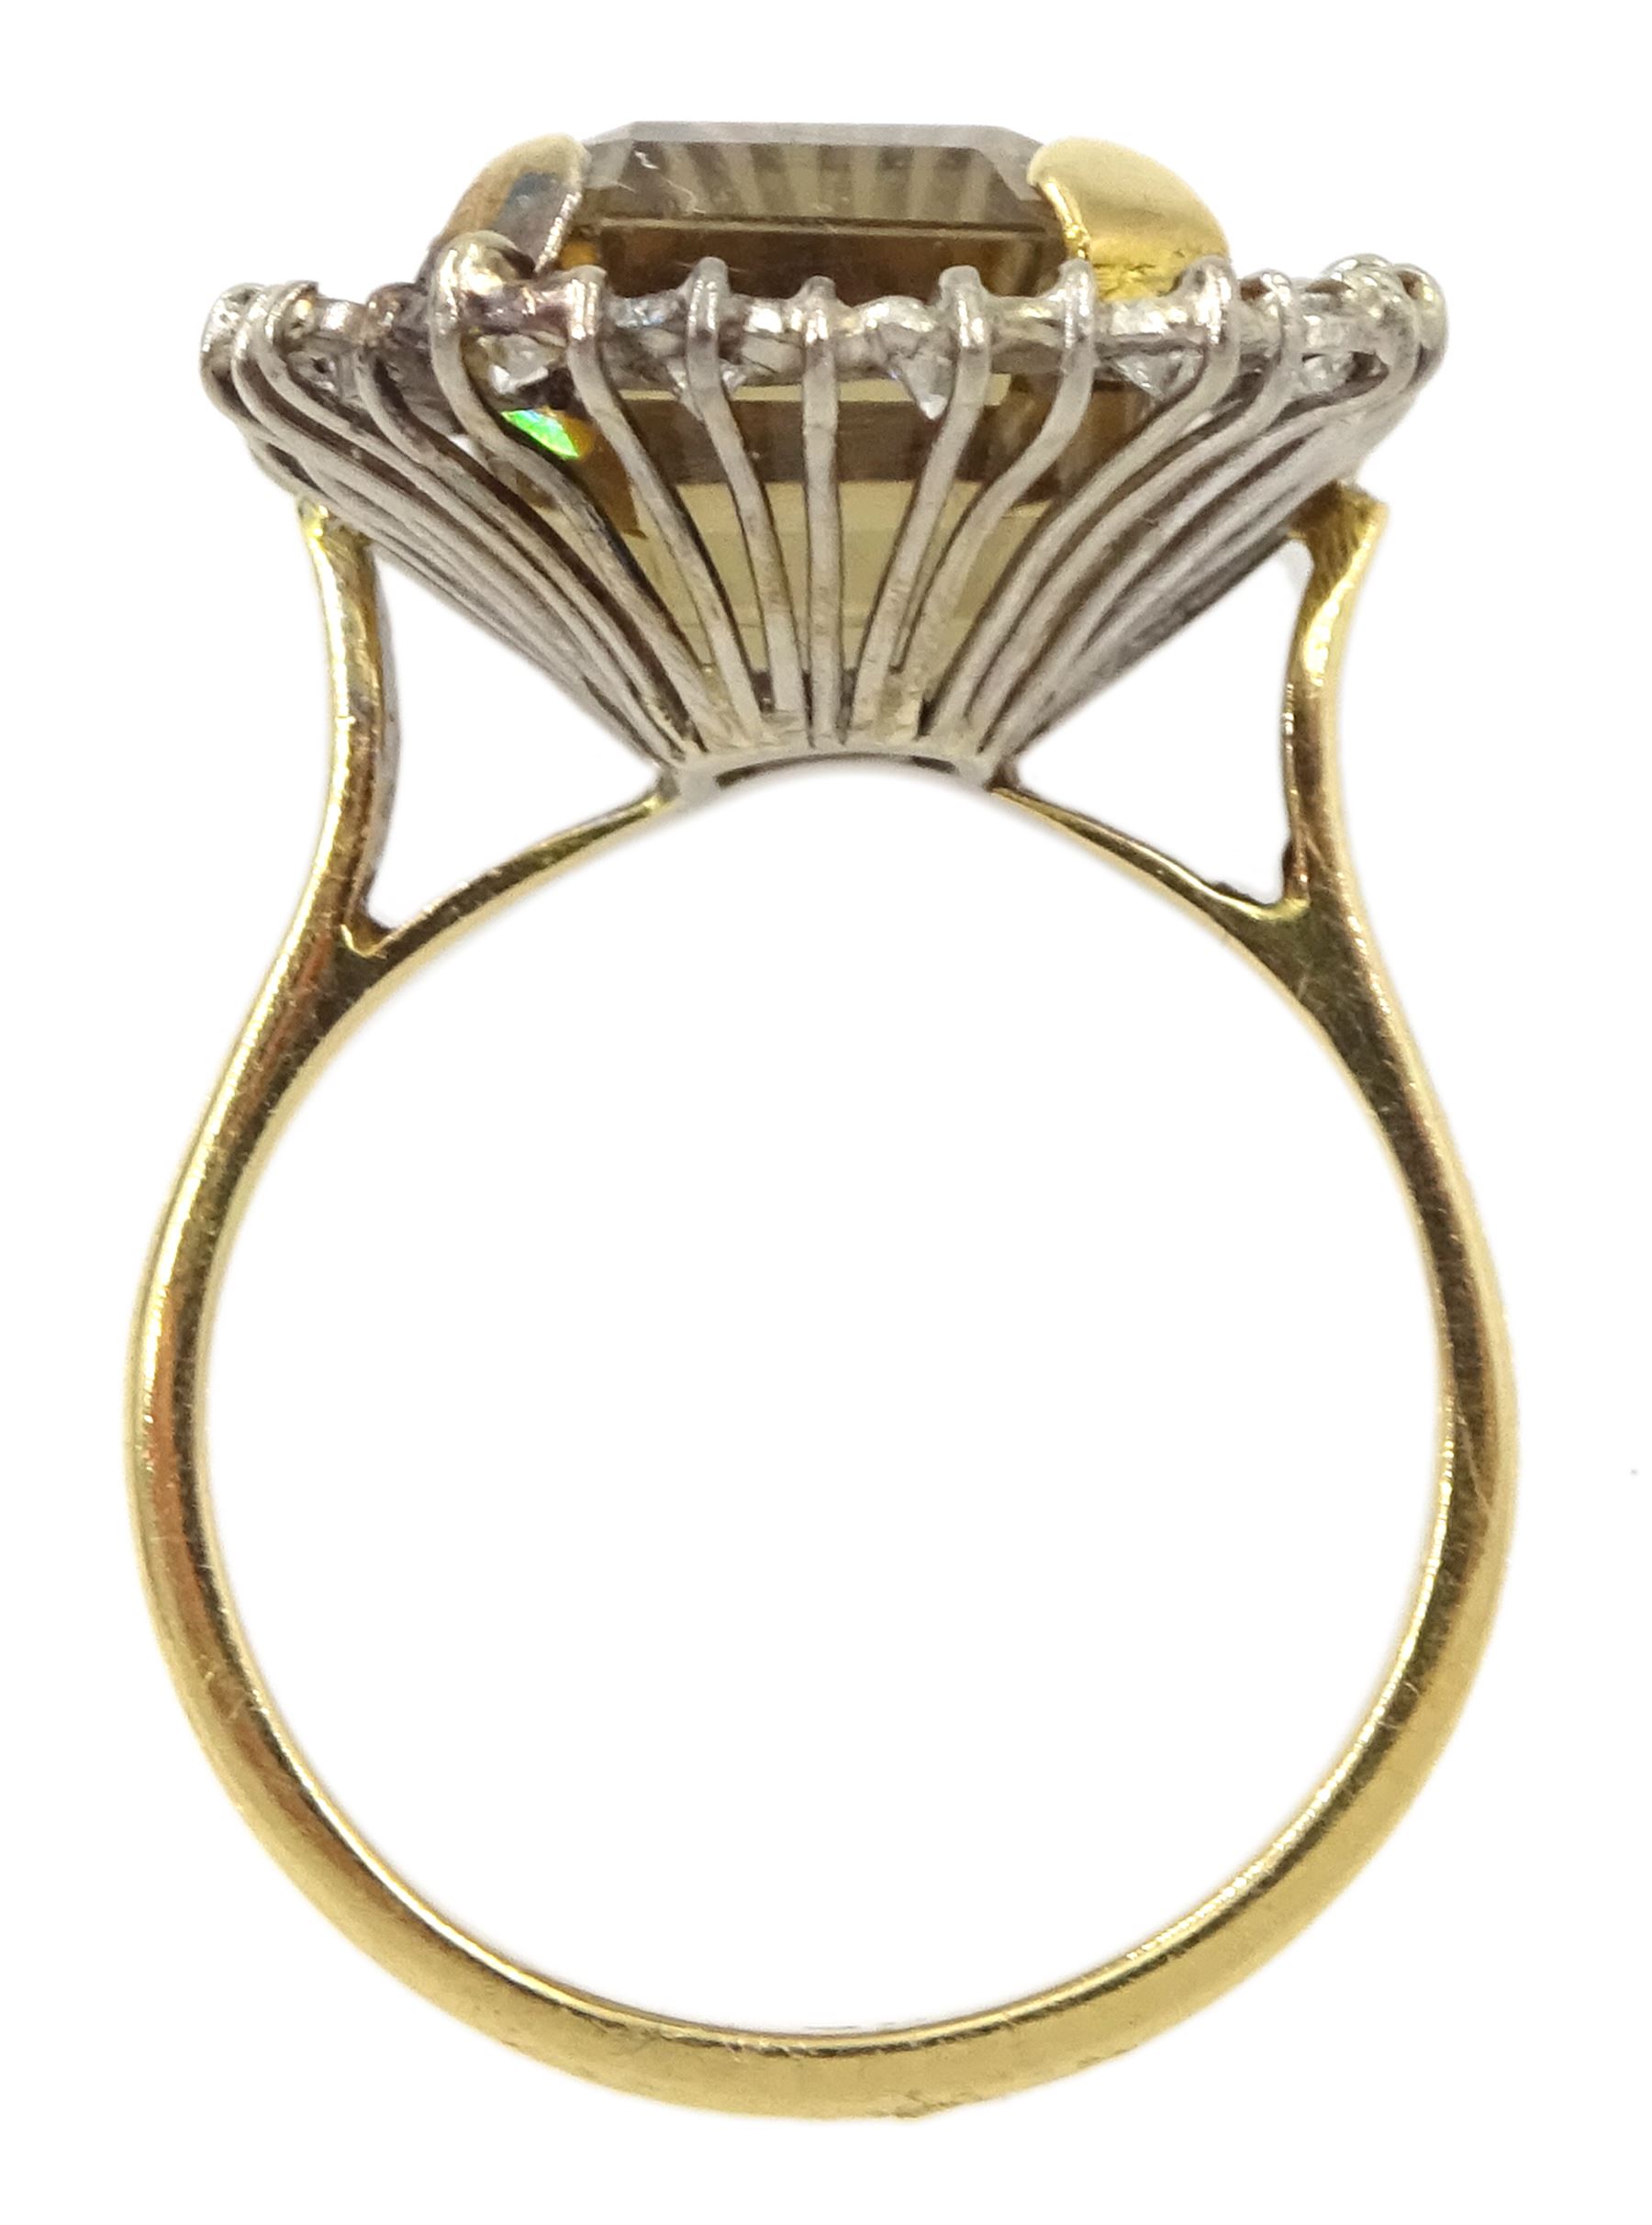 Gold smoky quartz diamond cluster ring - Image 4 of 4